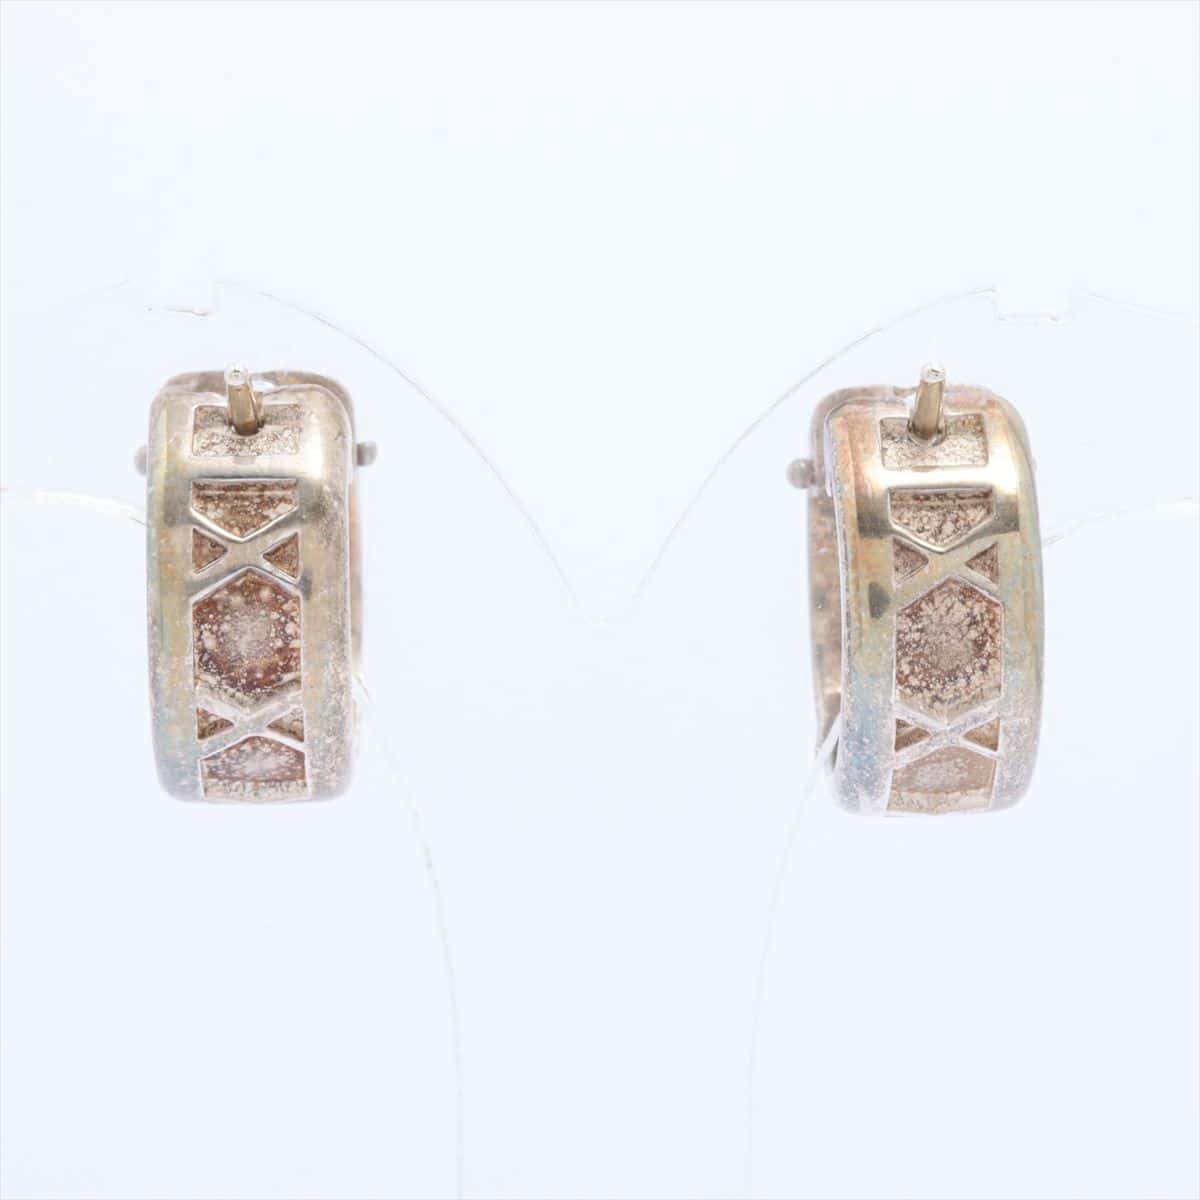 Tiffany Atlas Piercing jewelry (for both ears) 925 7.3g Silver